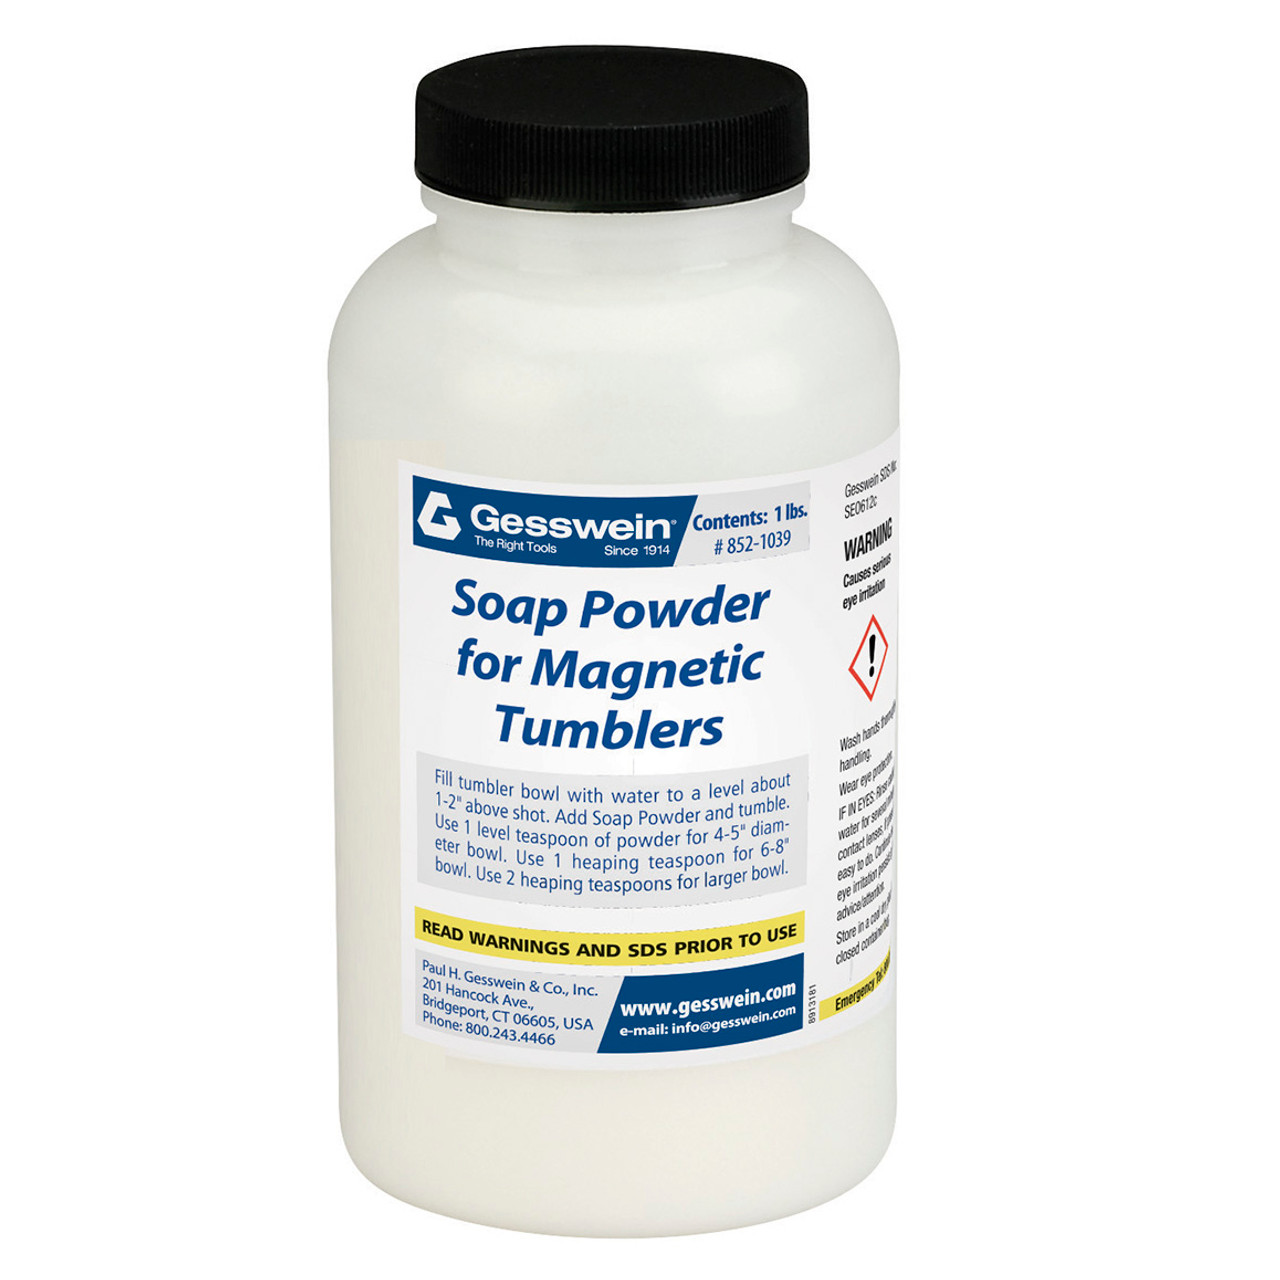 Soap Powder for Magnetic Tumblers - 3 lb. Jar